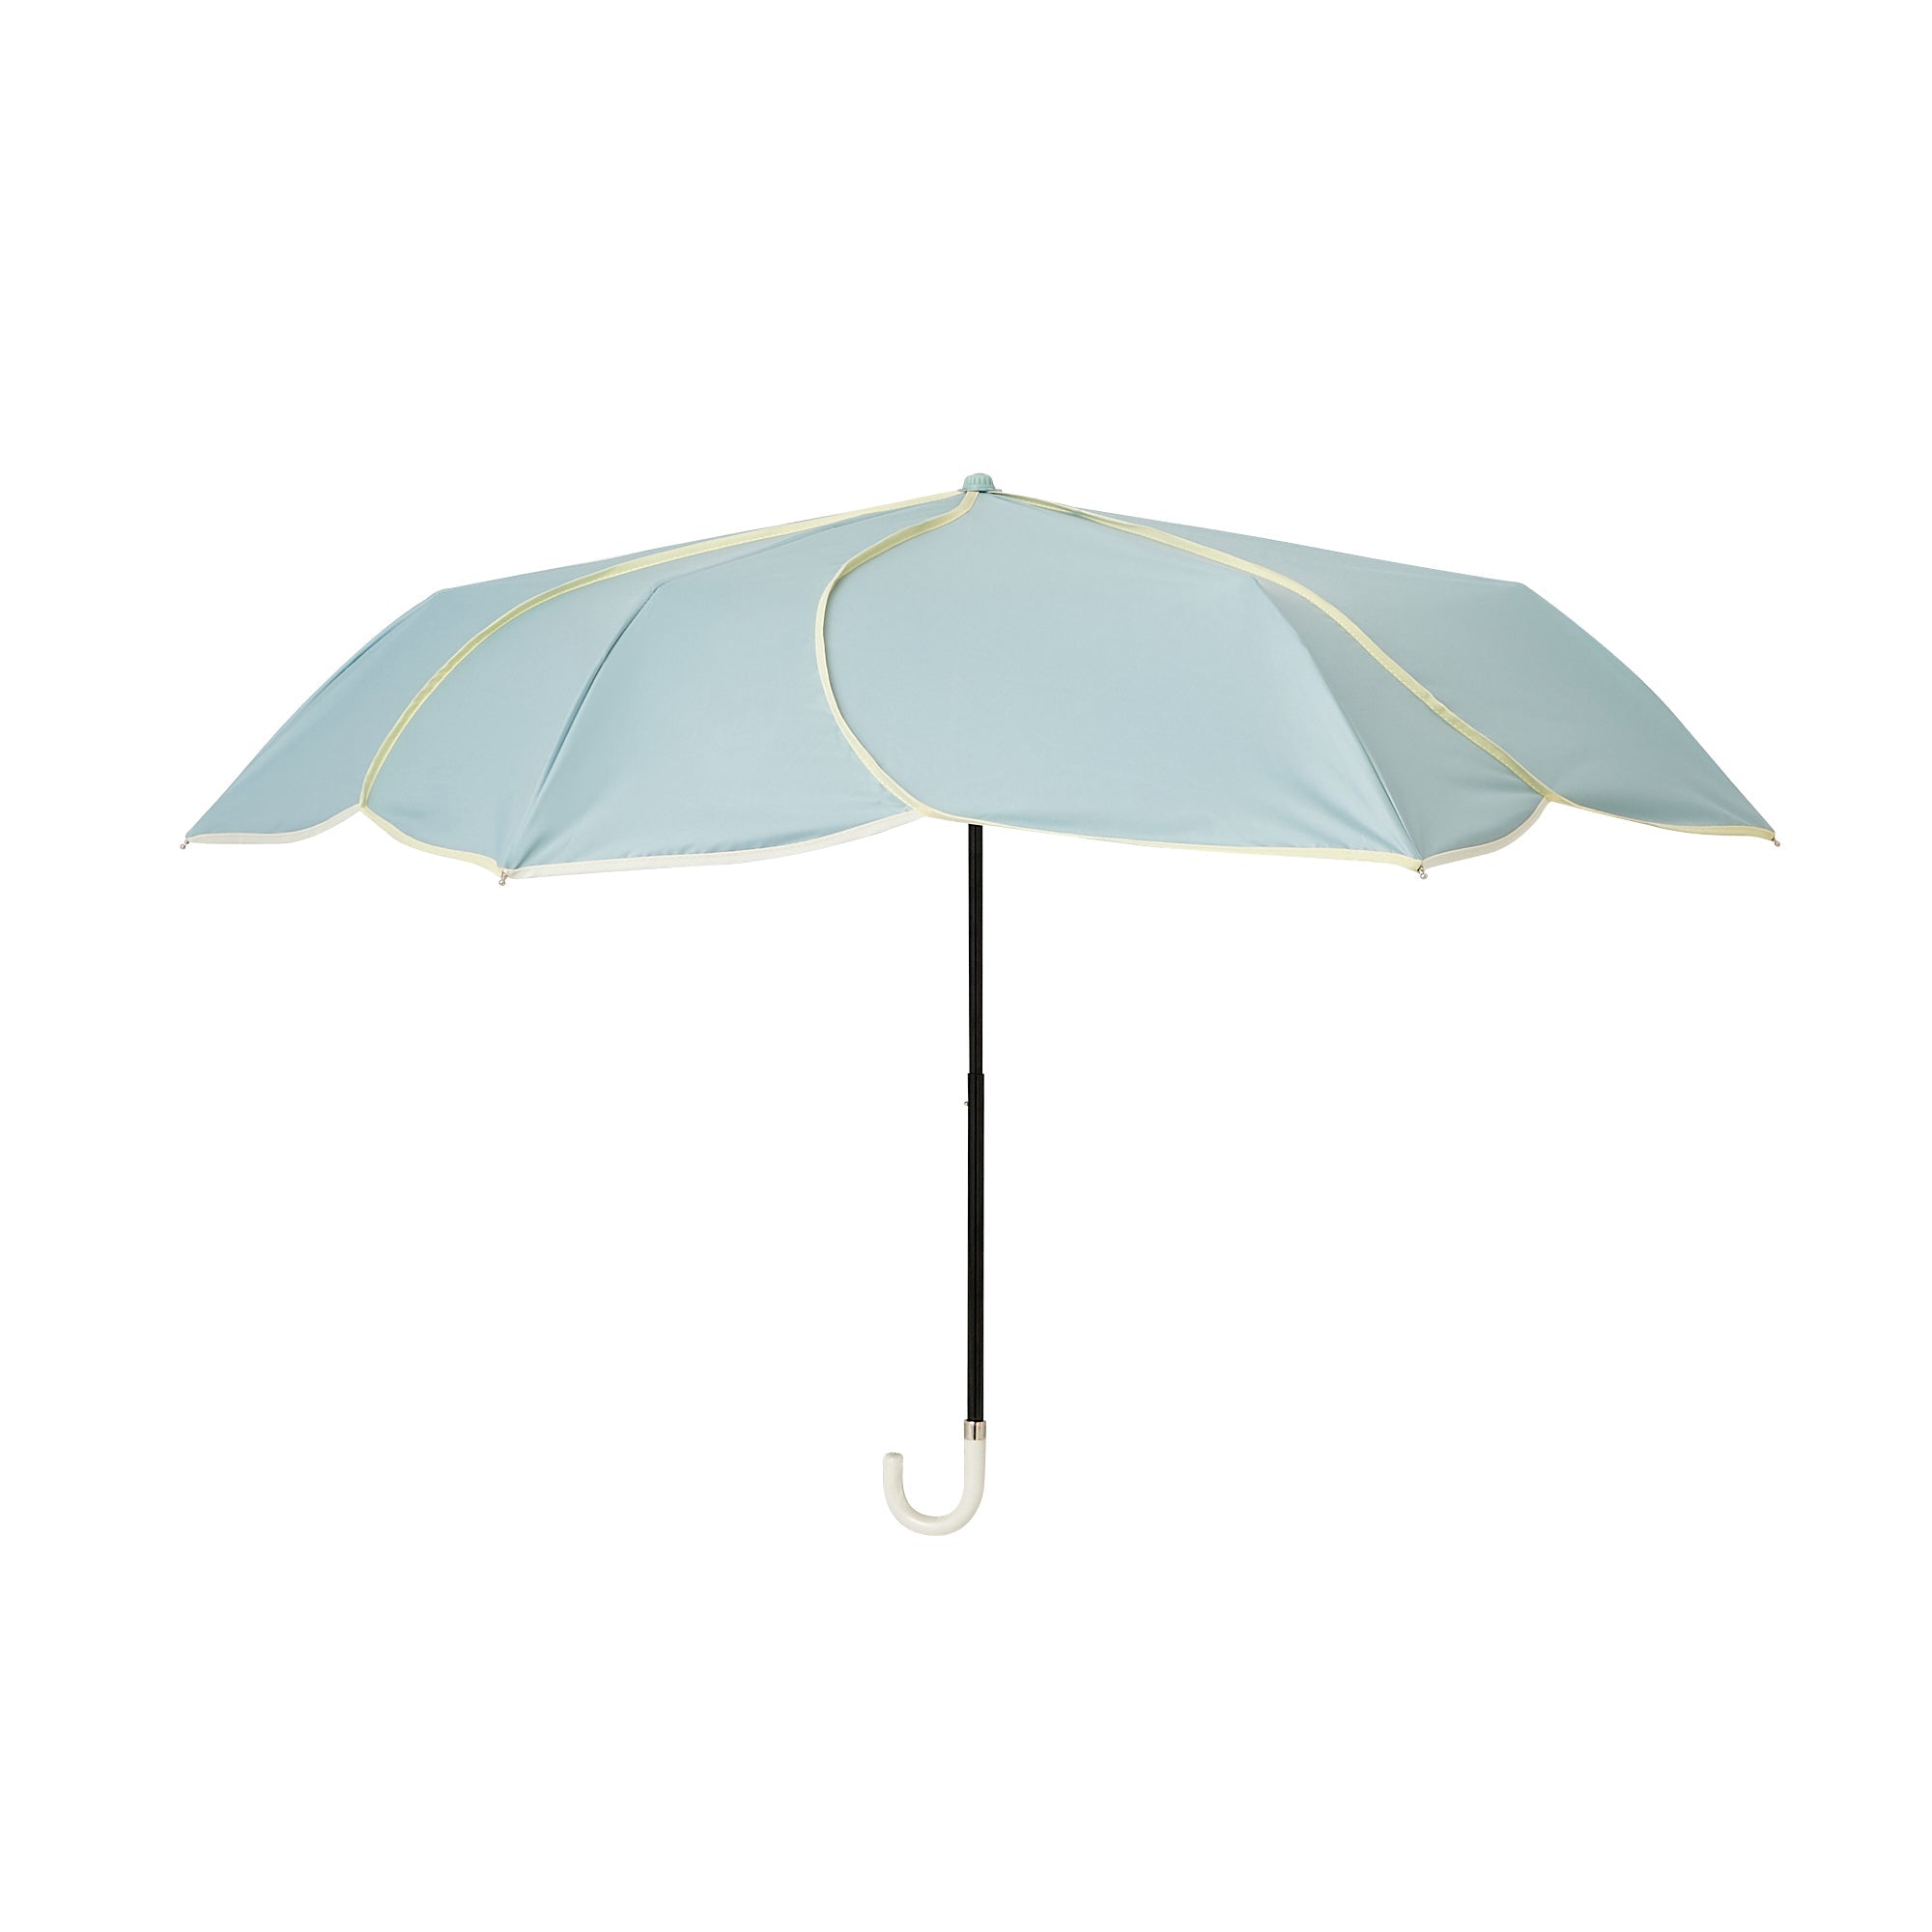 BICOLOR 雙色摺疊晴雨傘 47cm 綠色